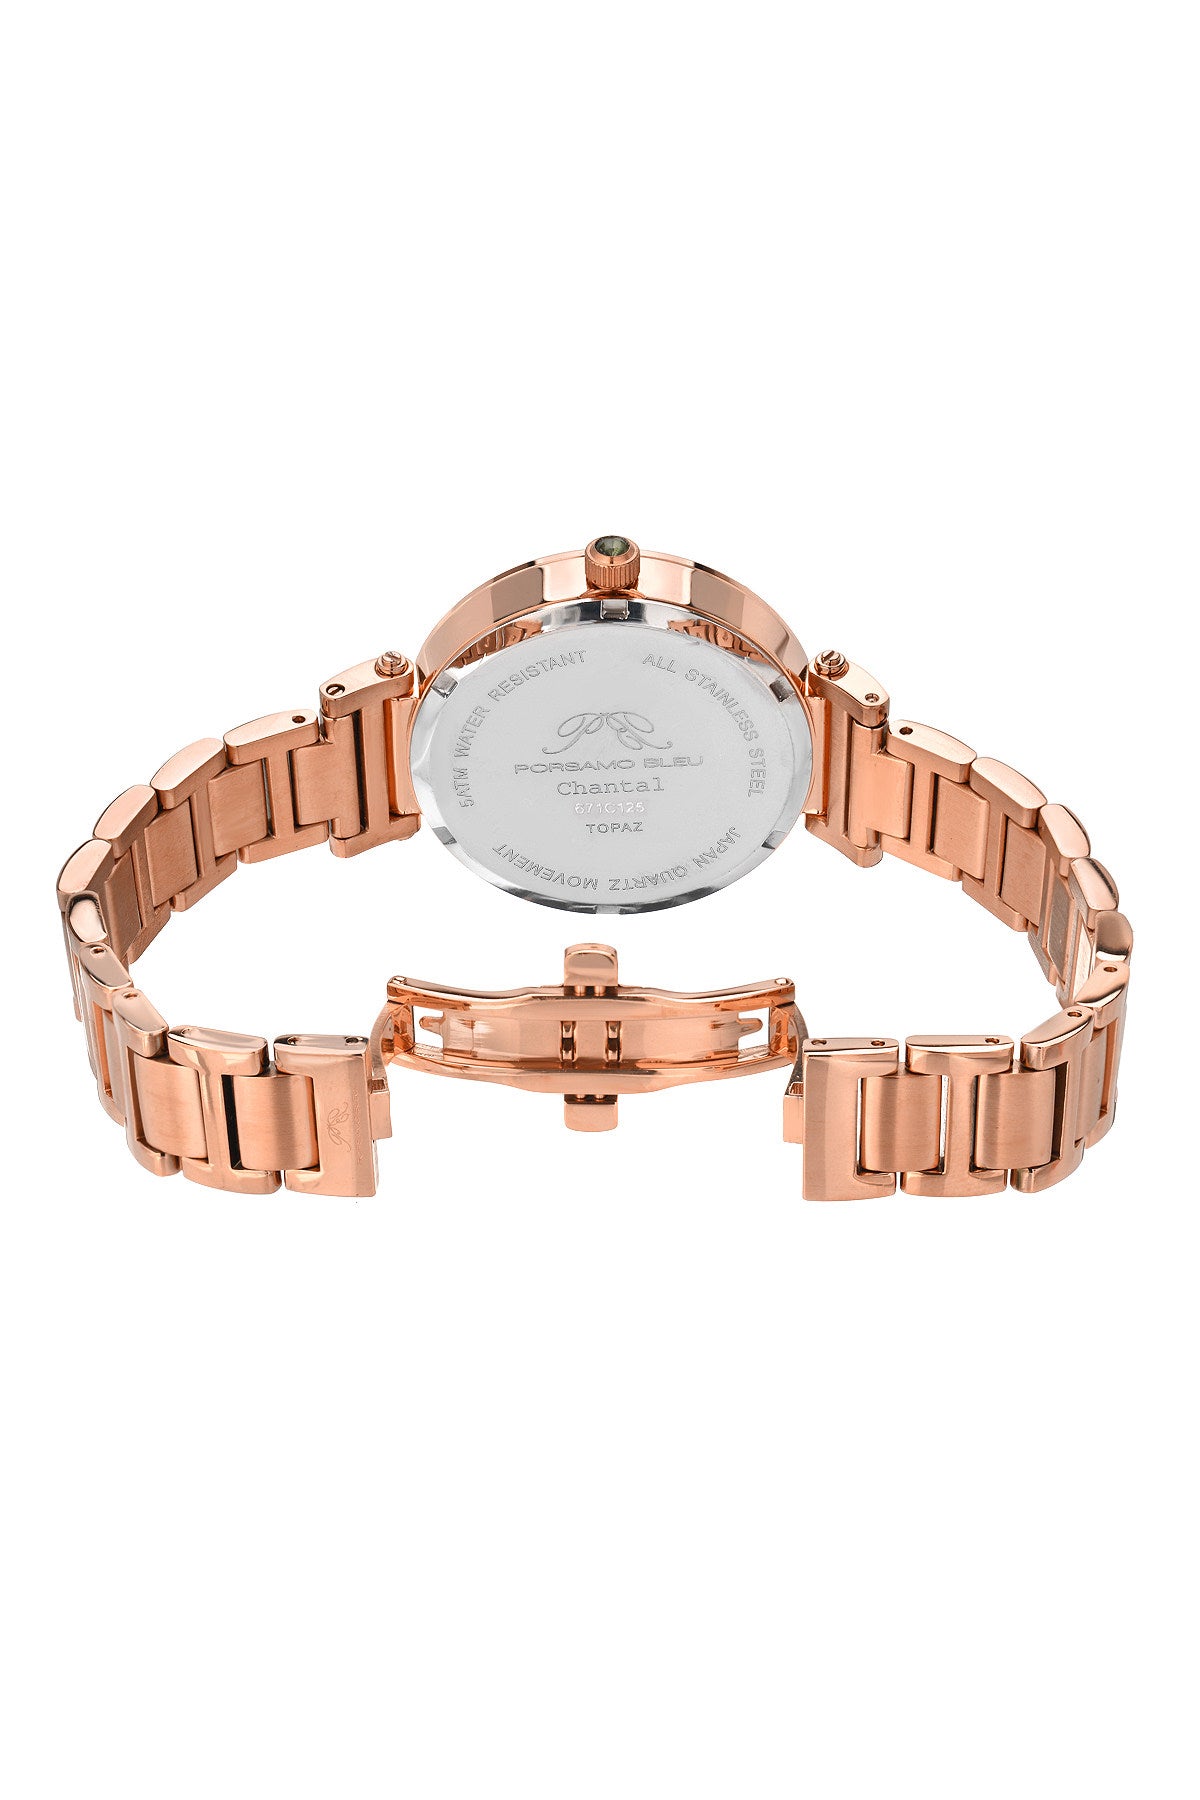 Porsamo Bleu Chantal Luxury Topaz Women's Stainless Steel Watch, Rose, White 671CCHS